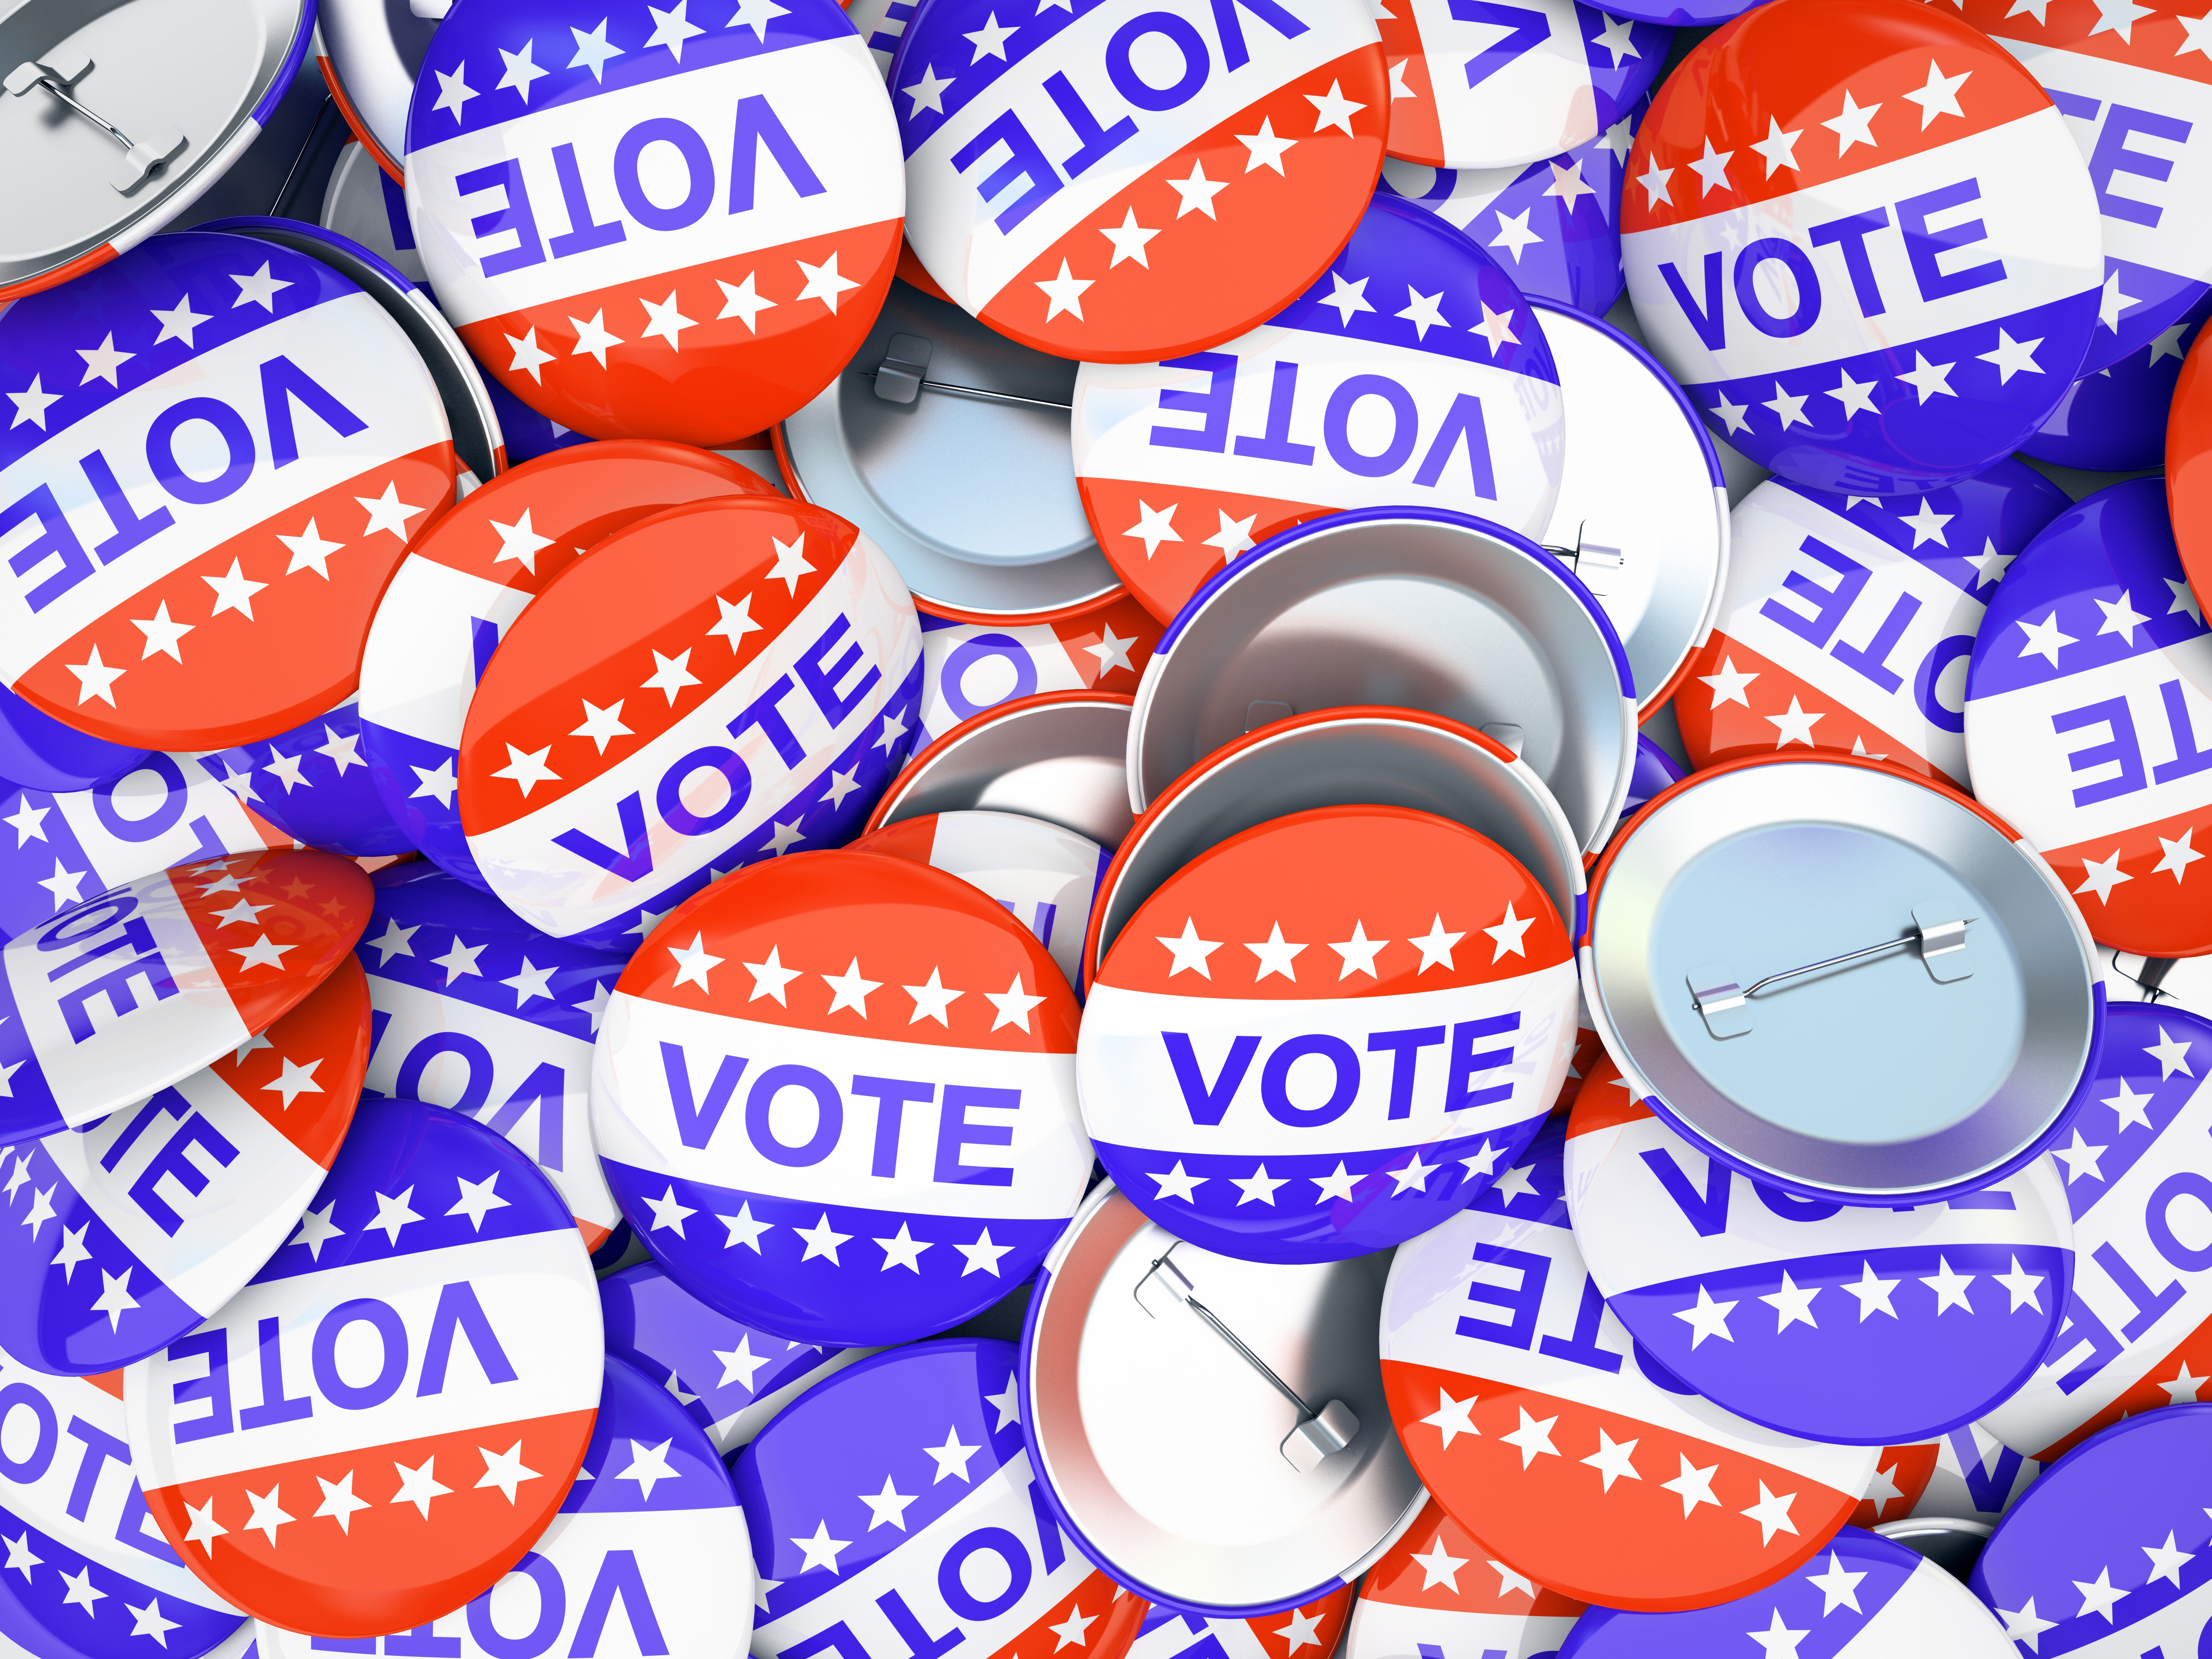 Image of "Vote" pins